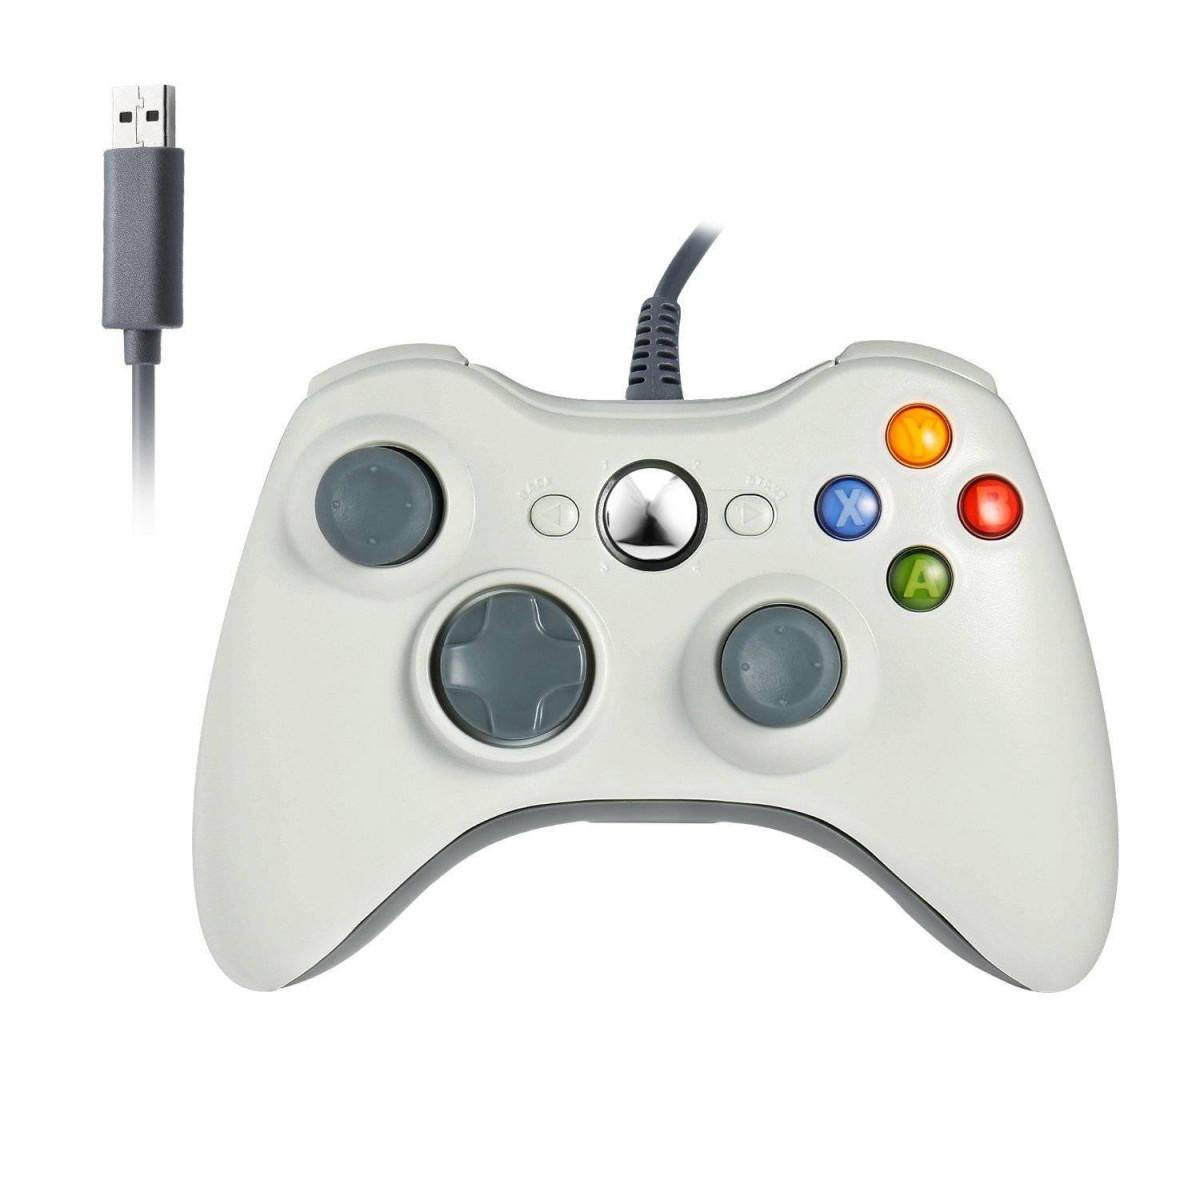 Купить джойстик для xbox 360. Геймпад Xbox 360 проводной. Джойстик Xbox 360 Wireless. Xbox 360 Controller USB. Джойстик Microsoft (Xbox 360) USB=2422917.